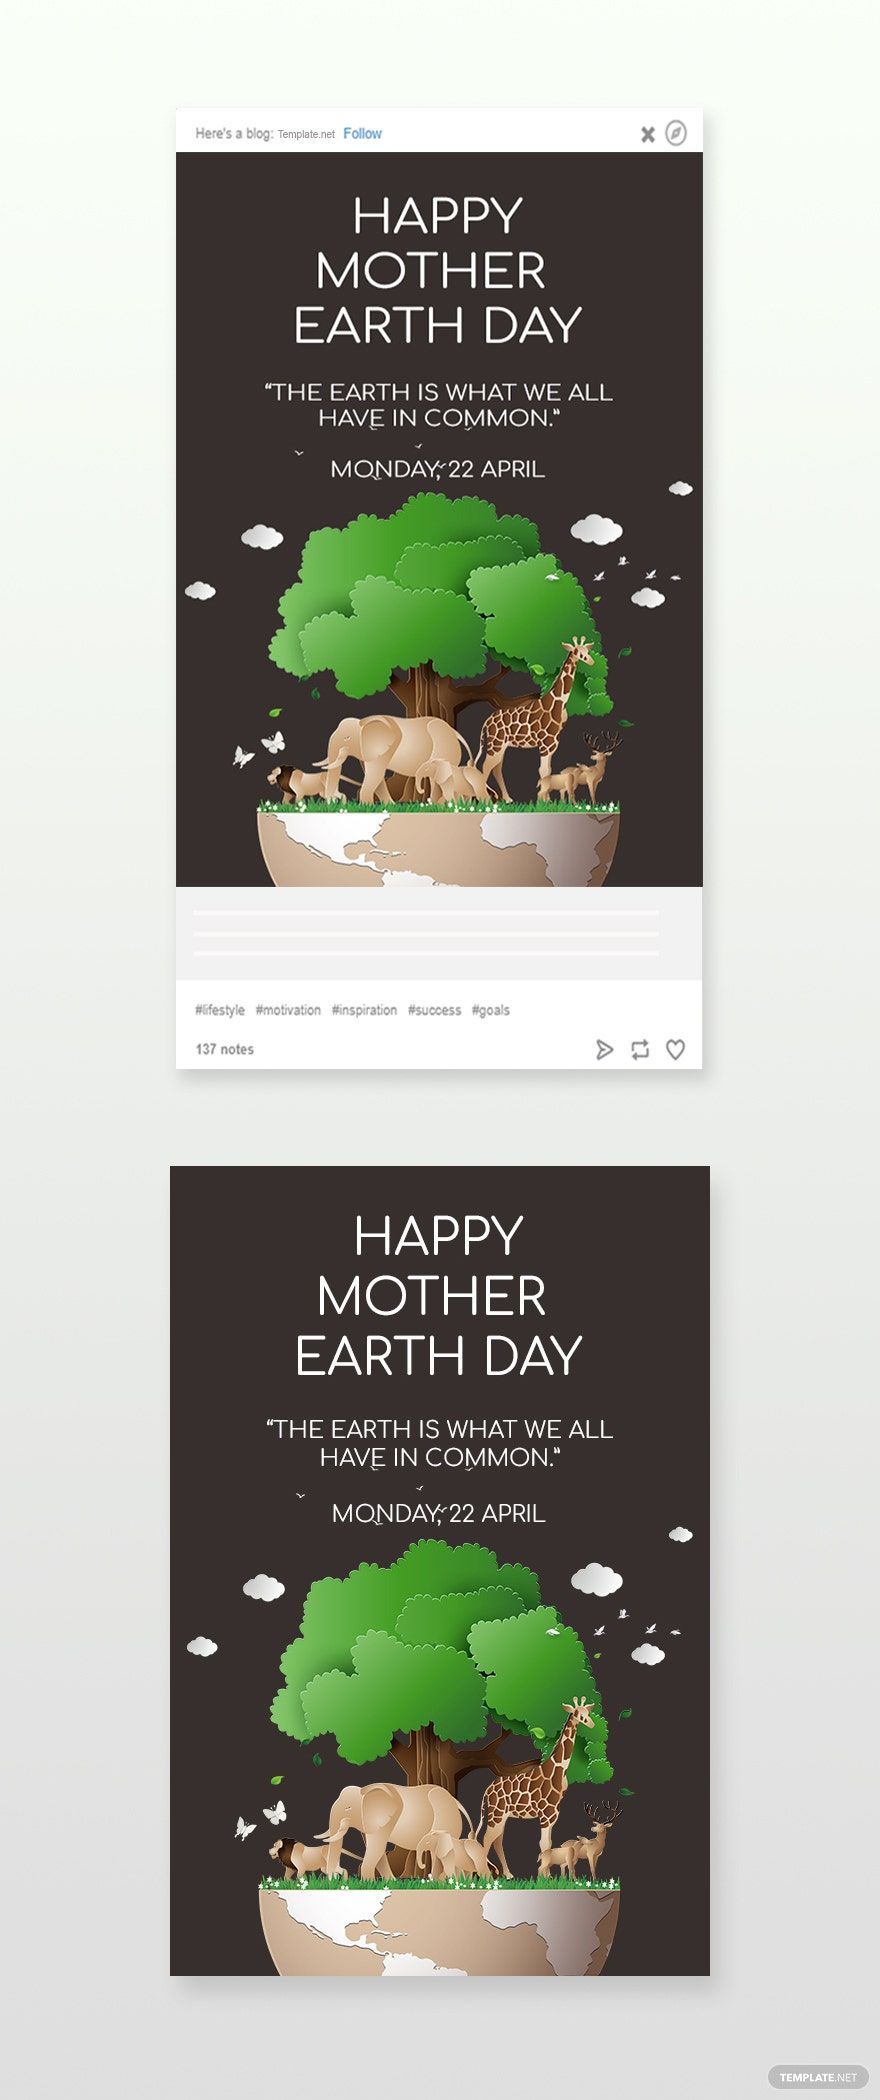 Tumblr Earth Day Template